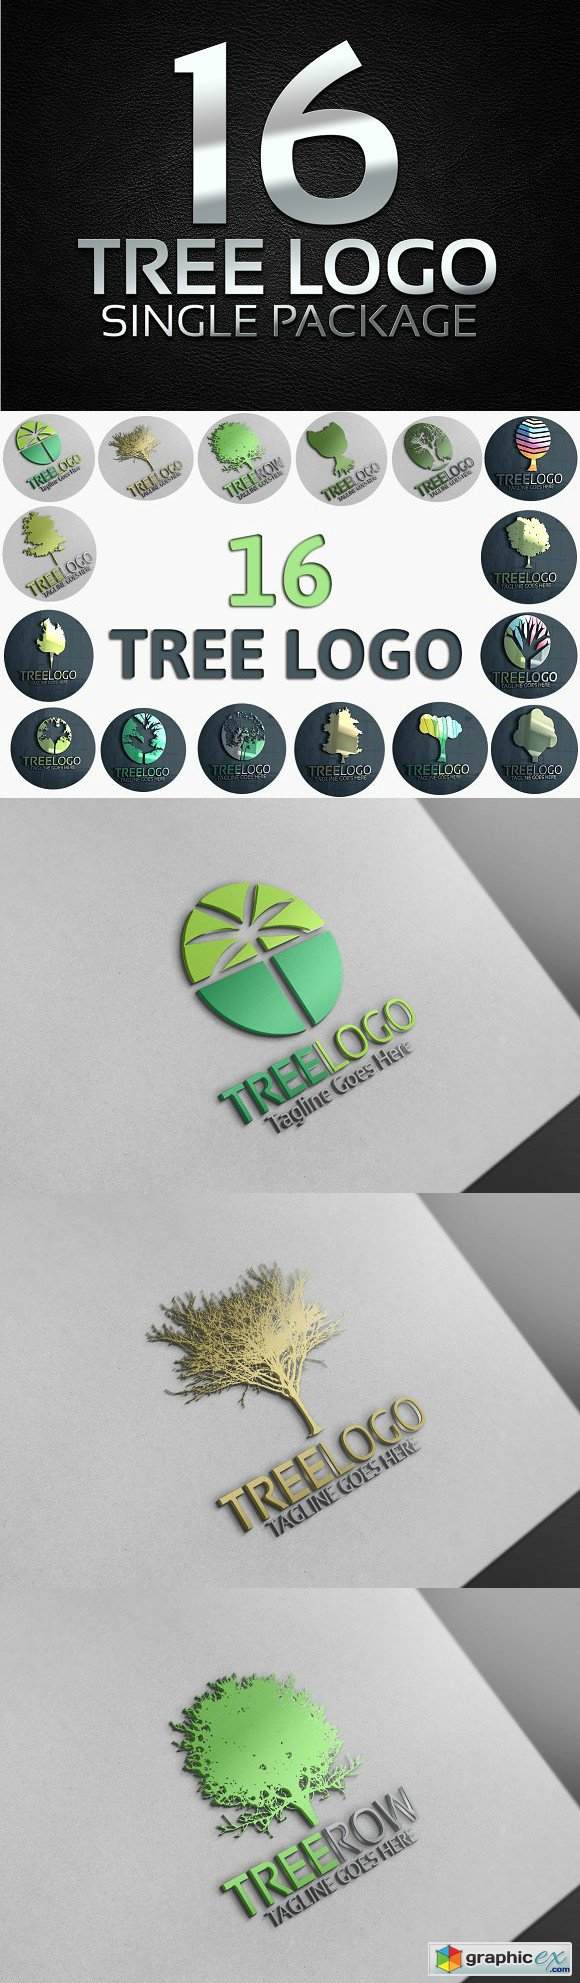 16 Tree Logo ALL SINGLE PACKAGE